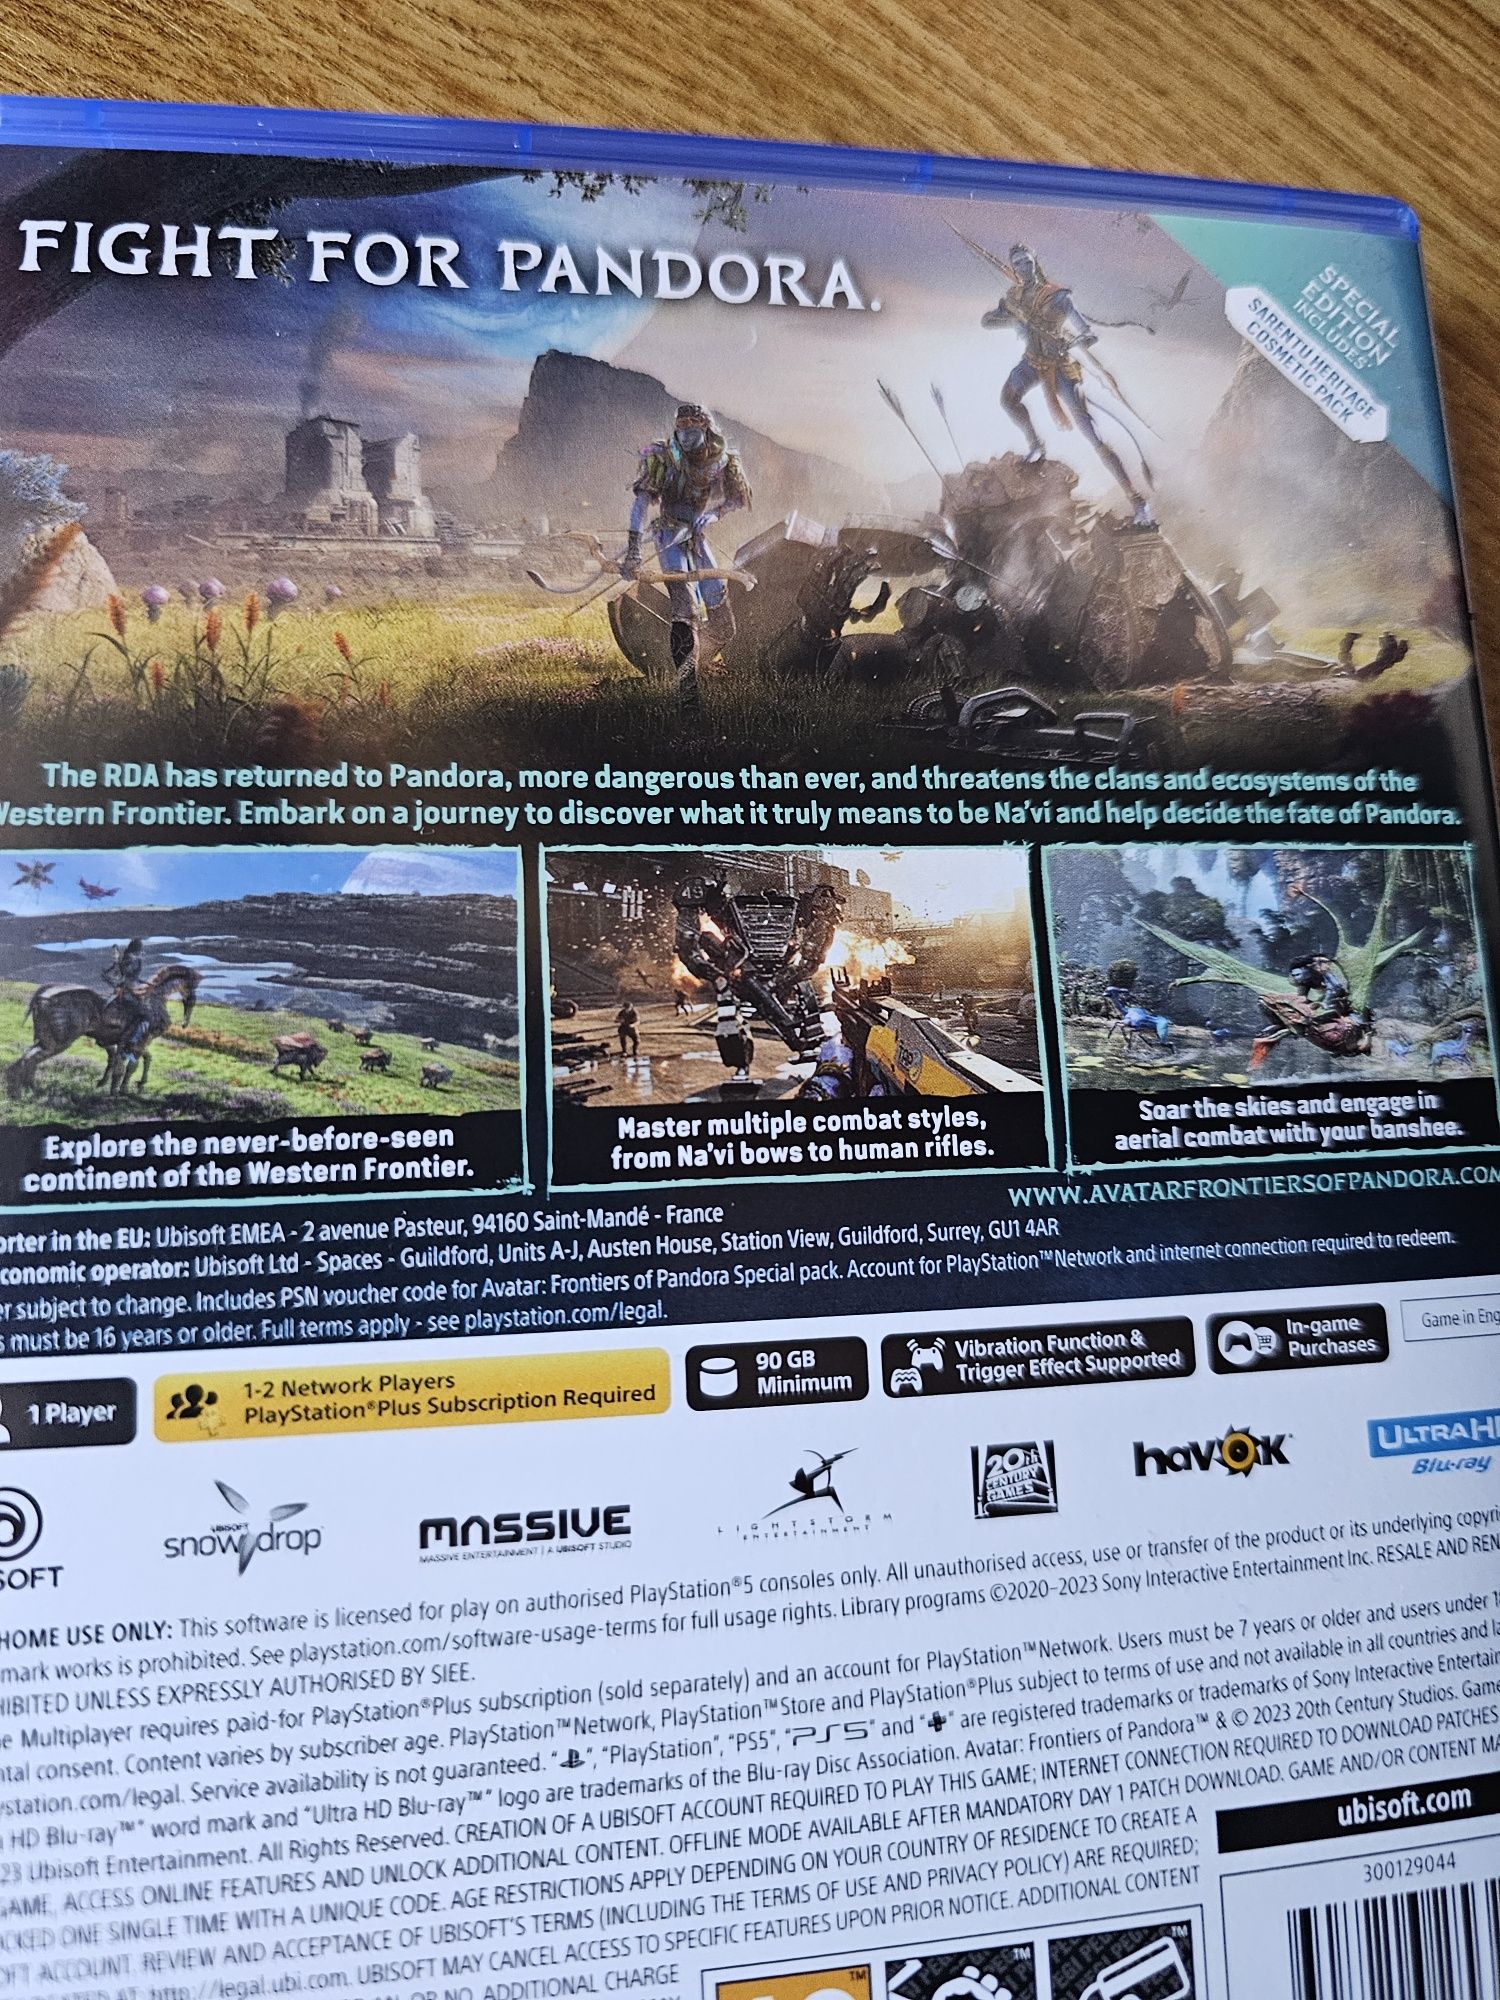 Avatar PS5 Special Edition , Extra digital content , season pass , dlc